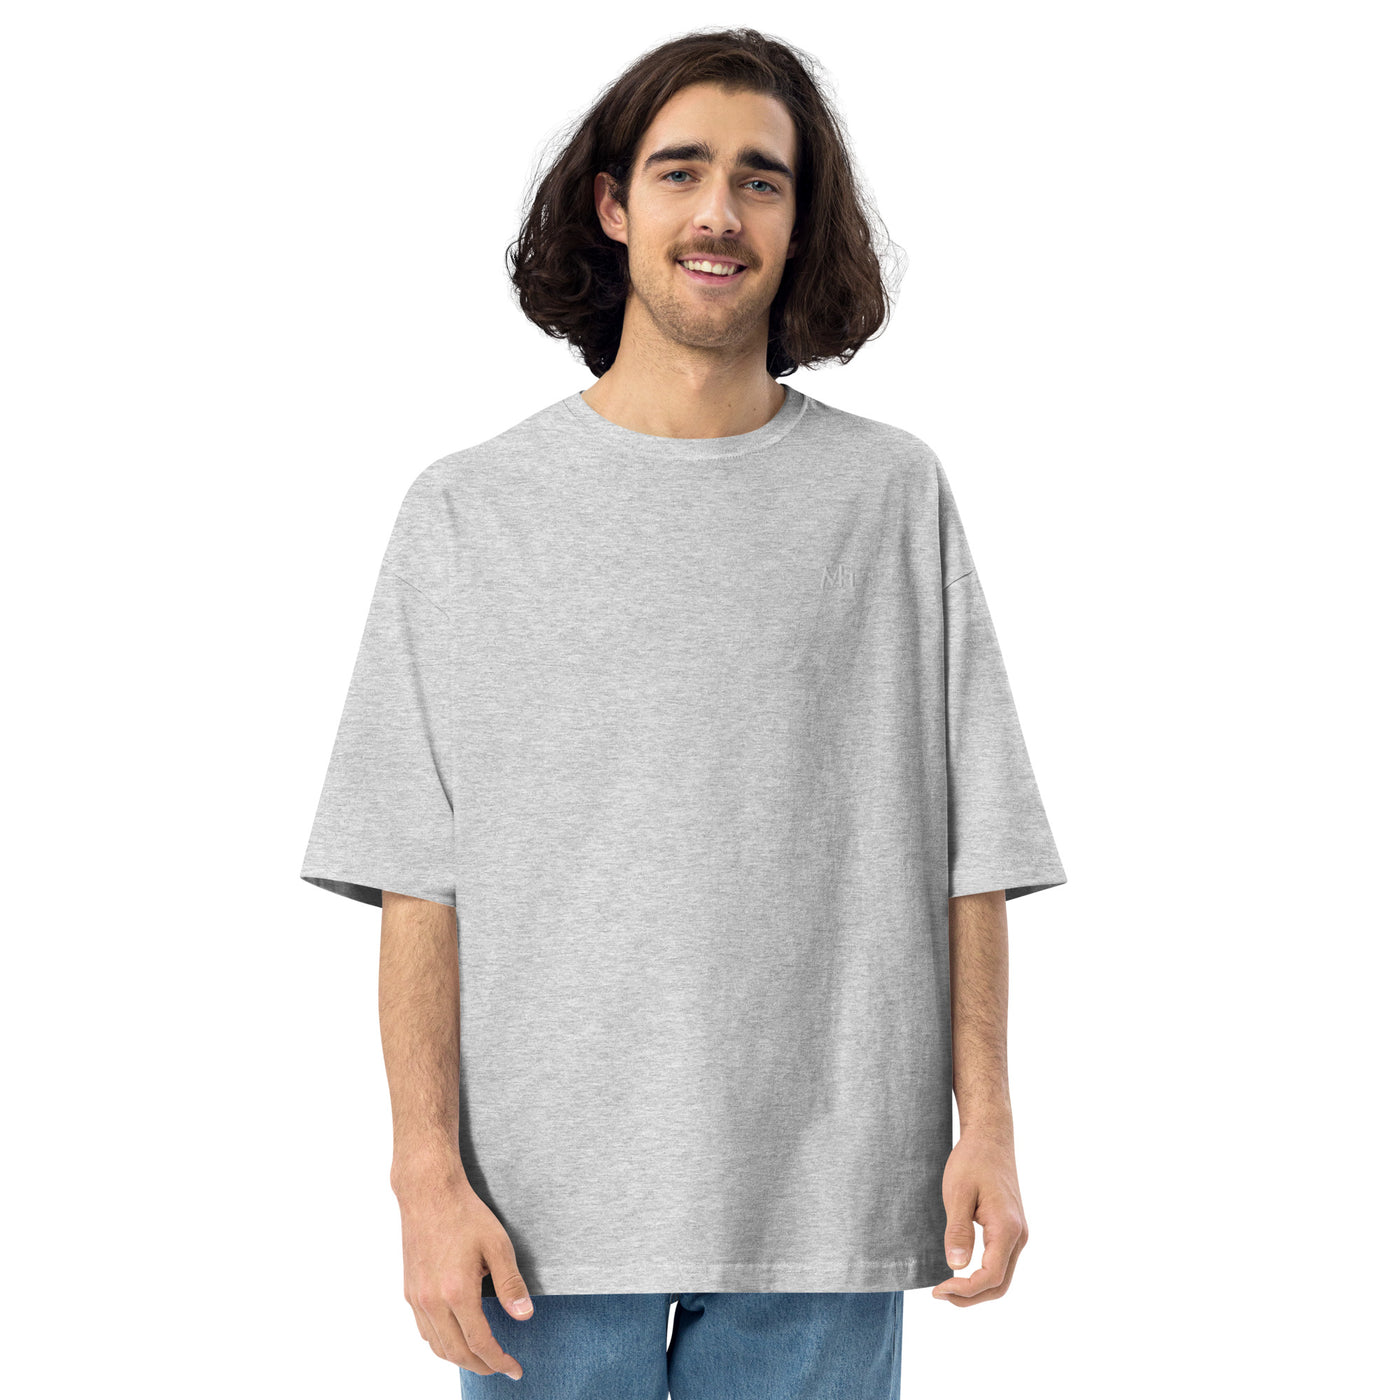 MHT - Unisex oversized t-shirt